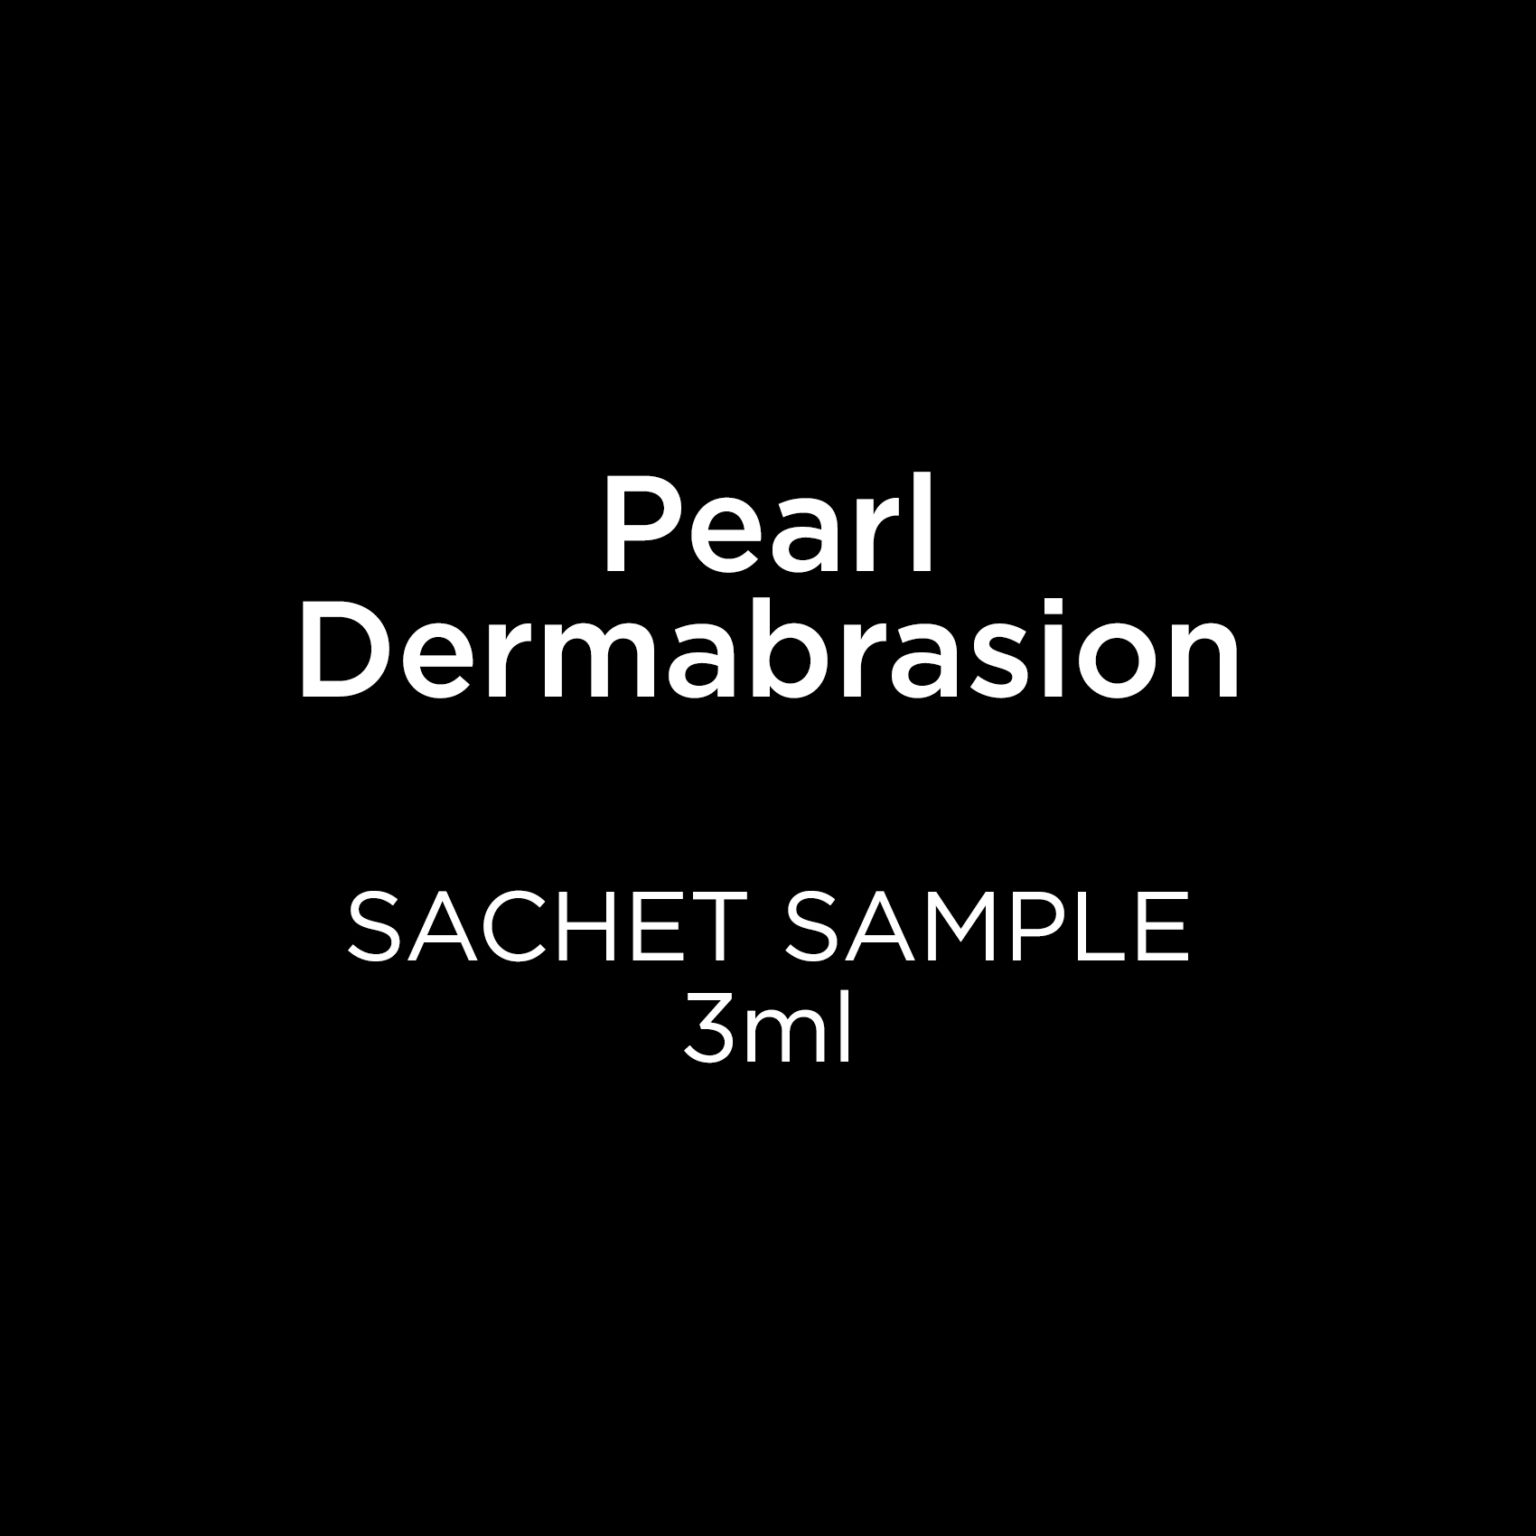 Sample Sachet Black Diamond Pearl Dermabrasion